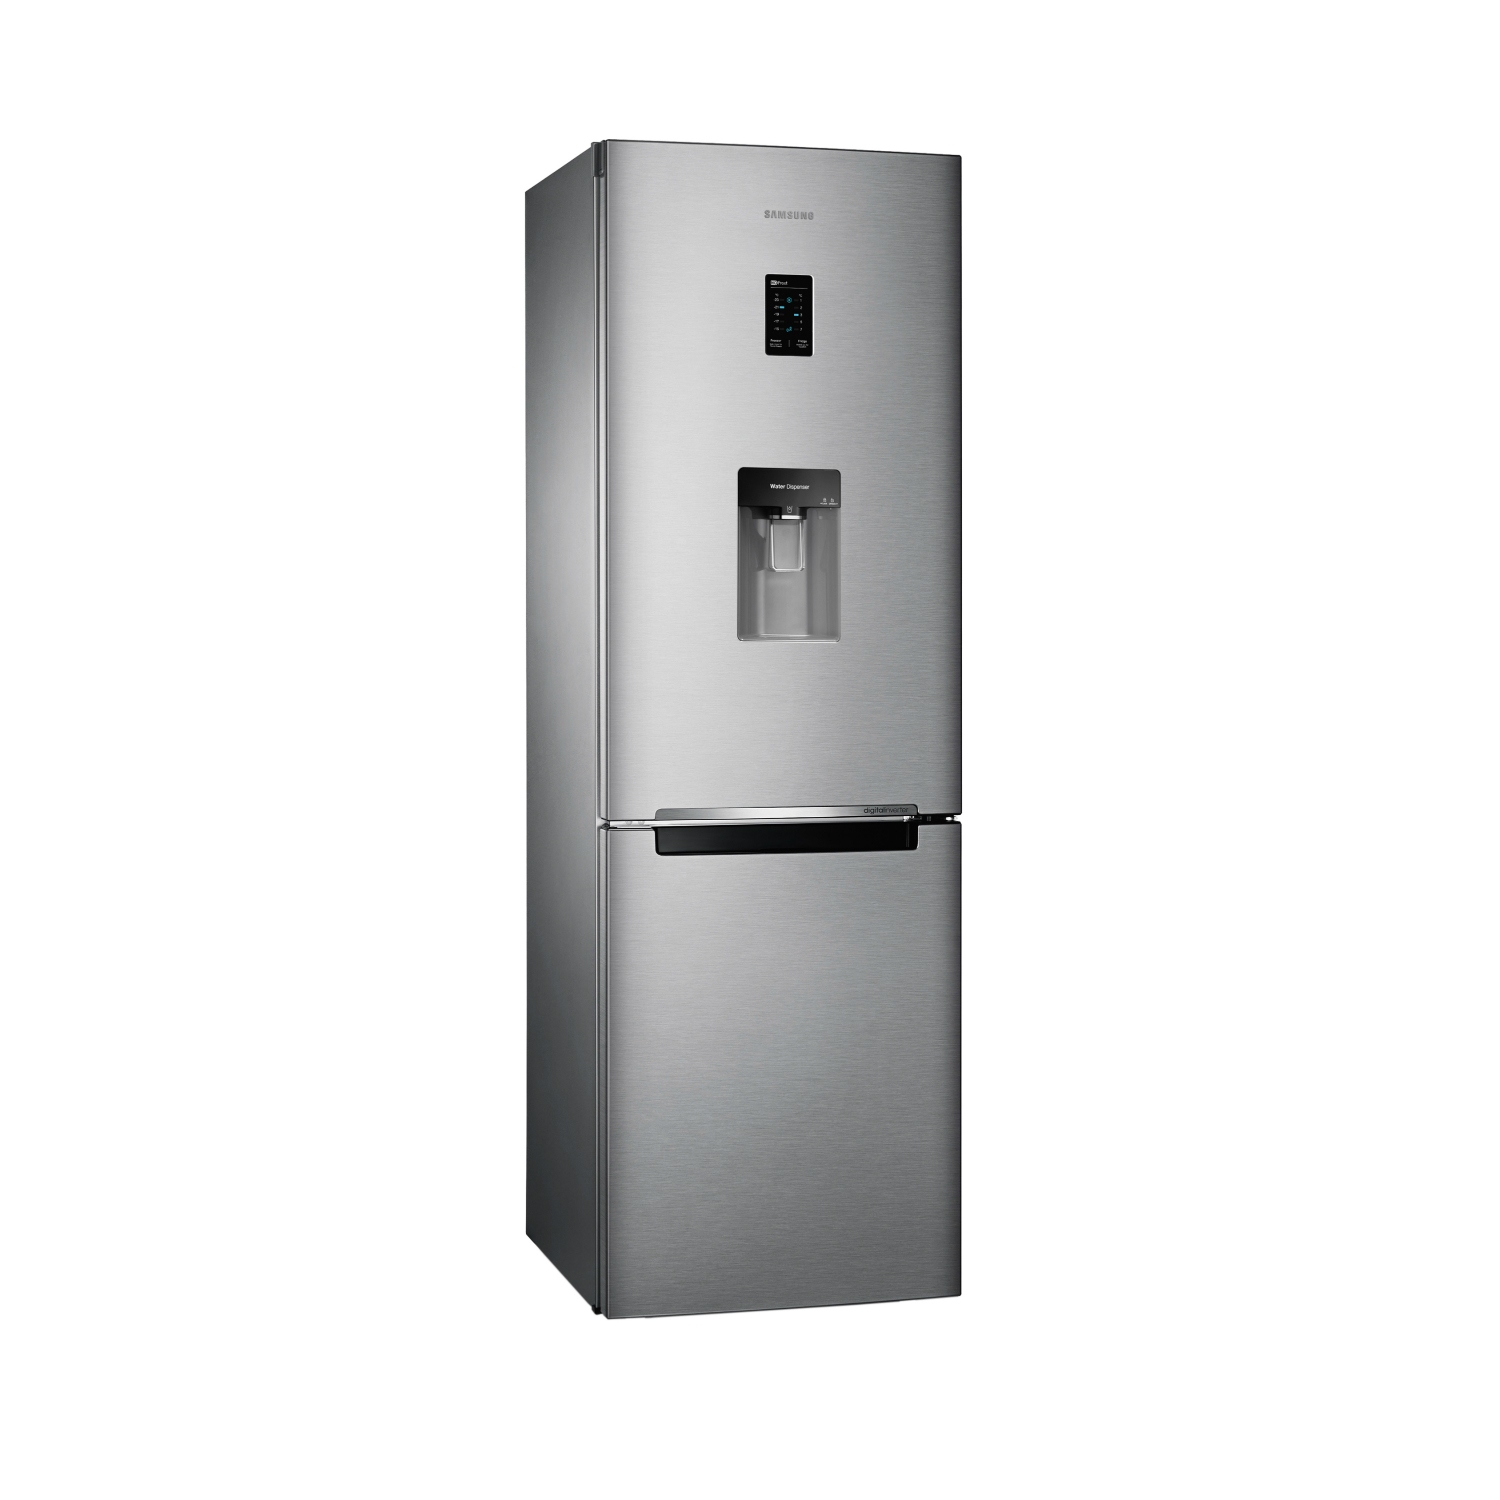 Samsung 60cm Total No Frost Fridge Freezer - Water Dispenser - Silver - 4